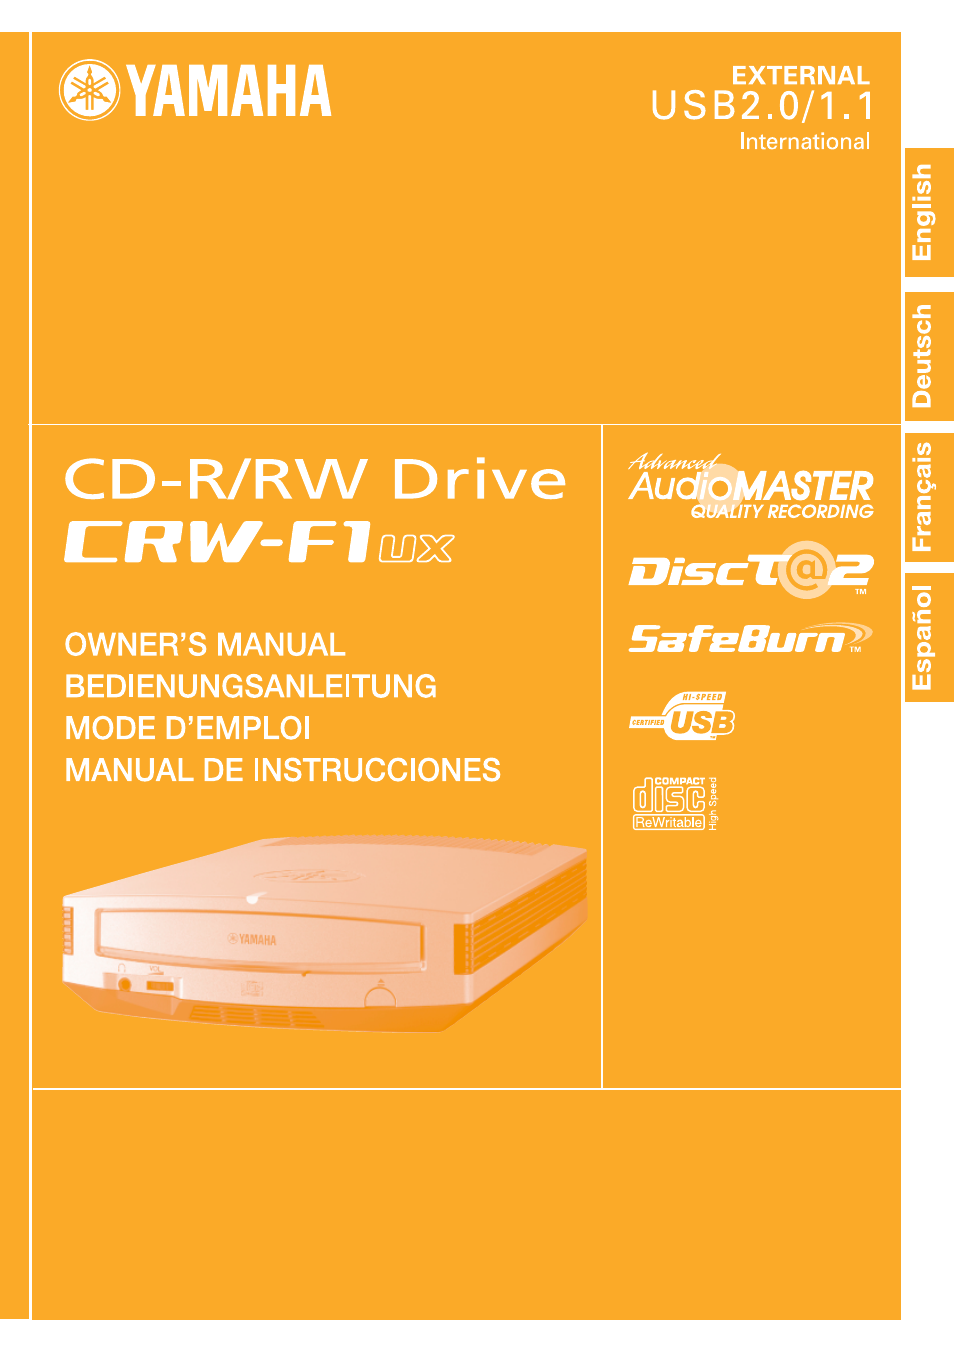 CD Recordable/Rewritable Drive CRW-F1UX